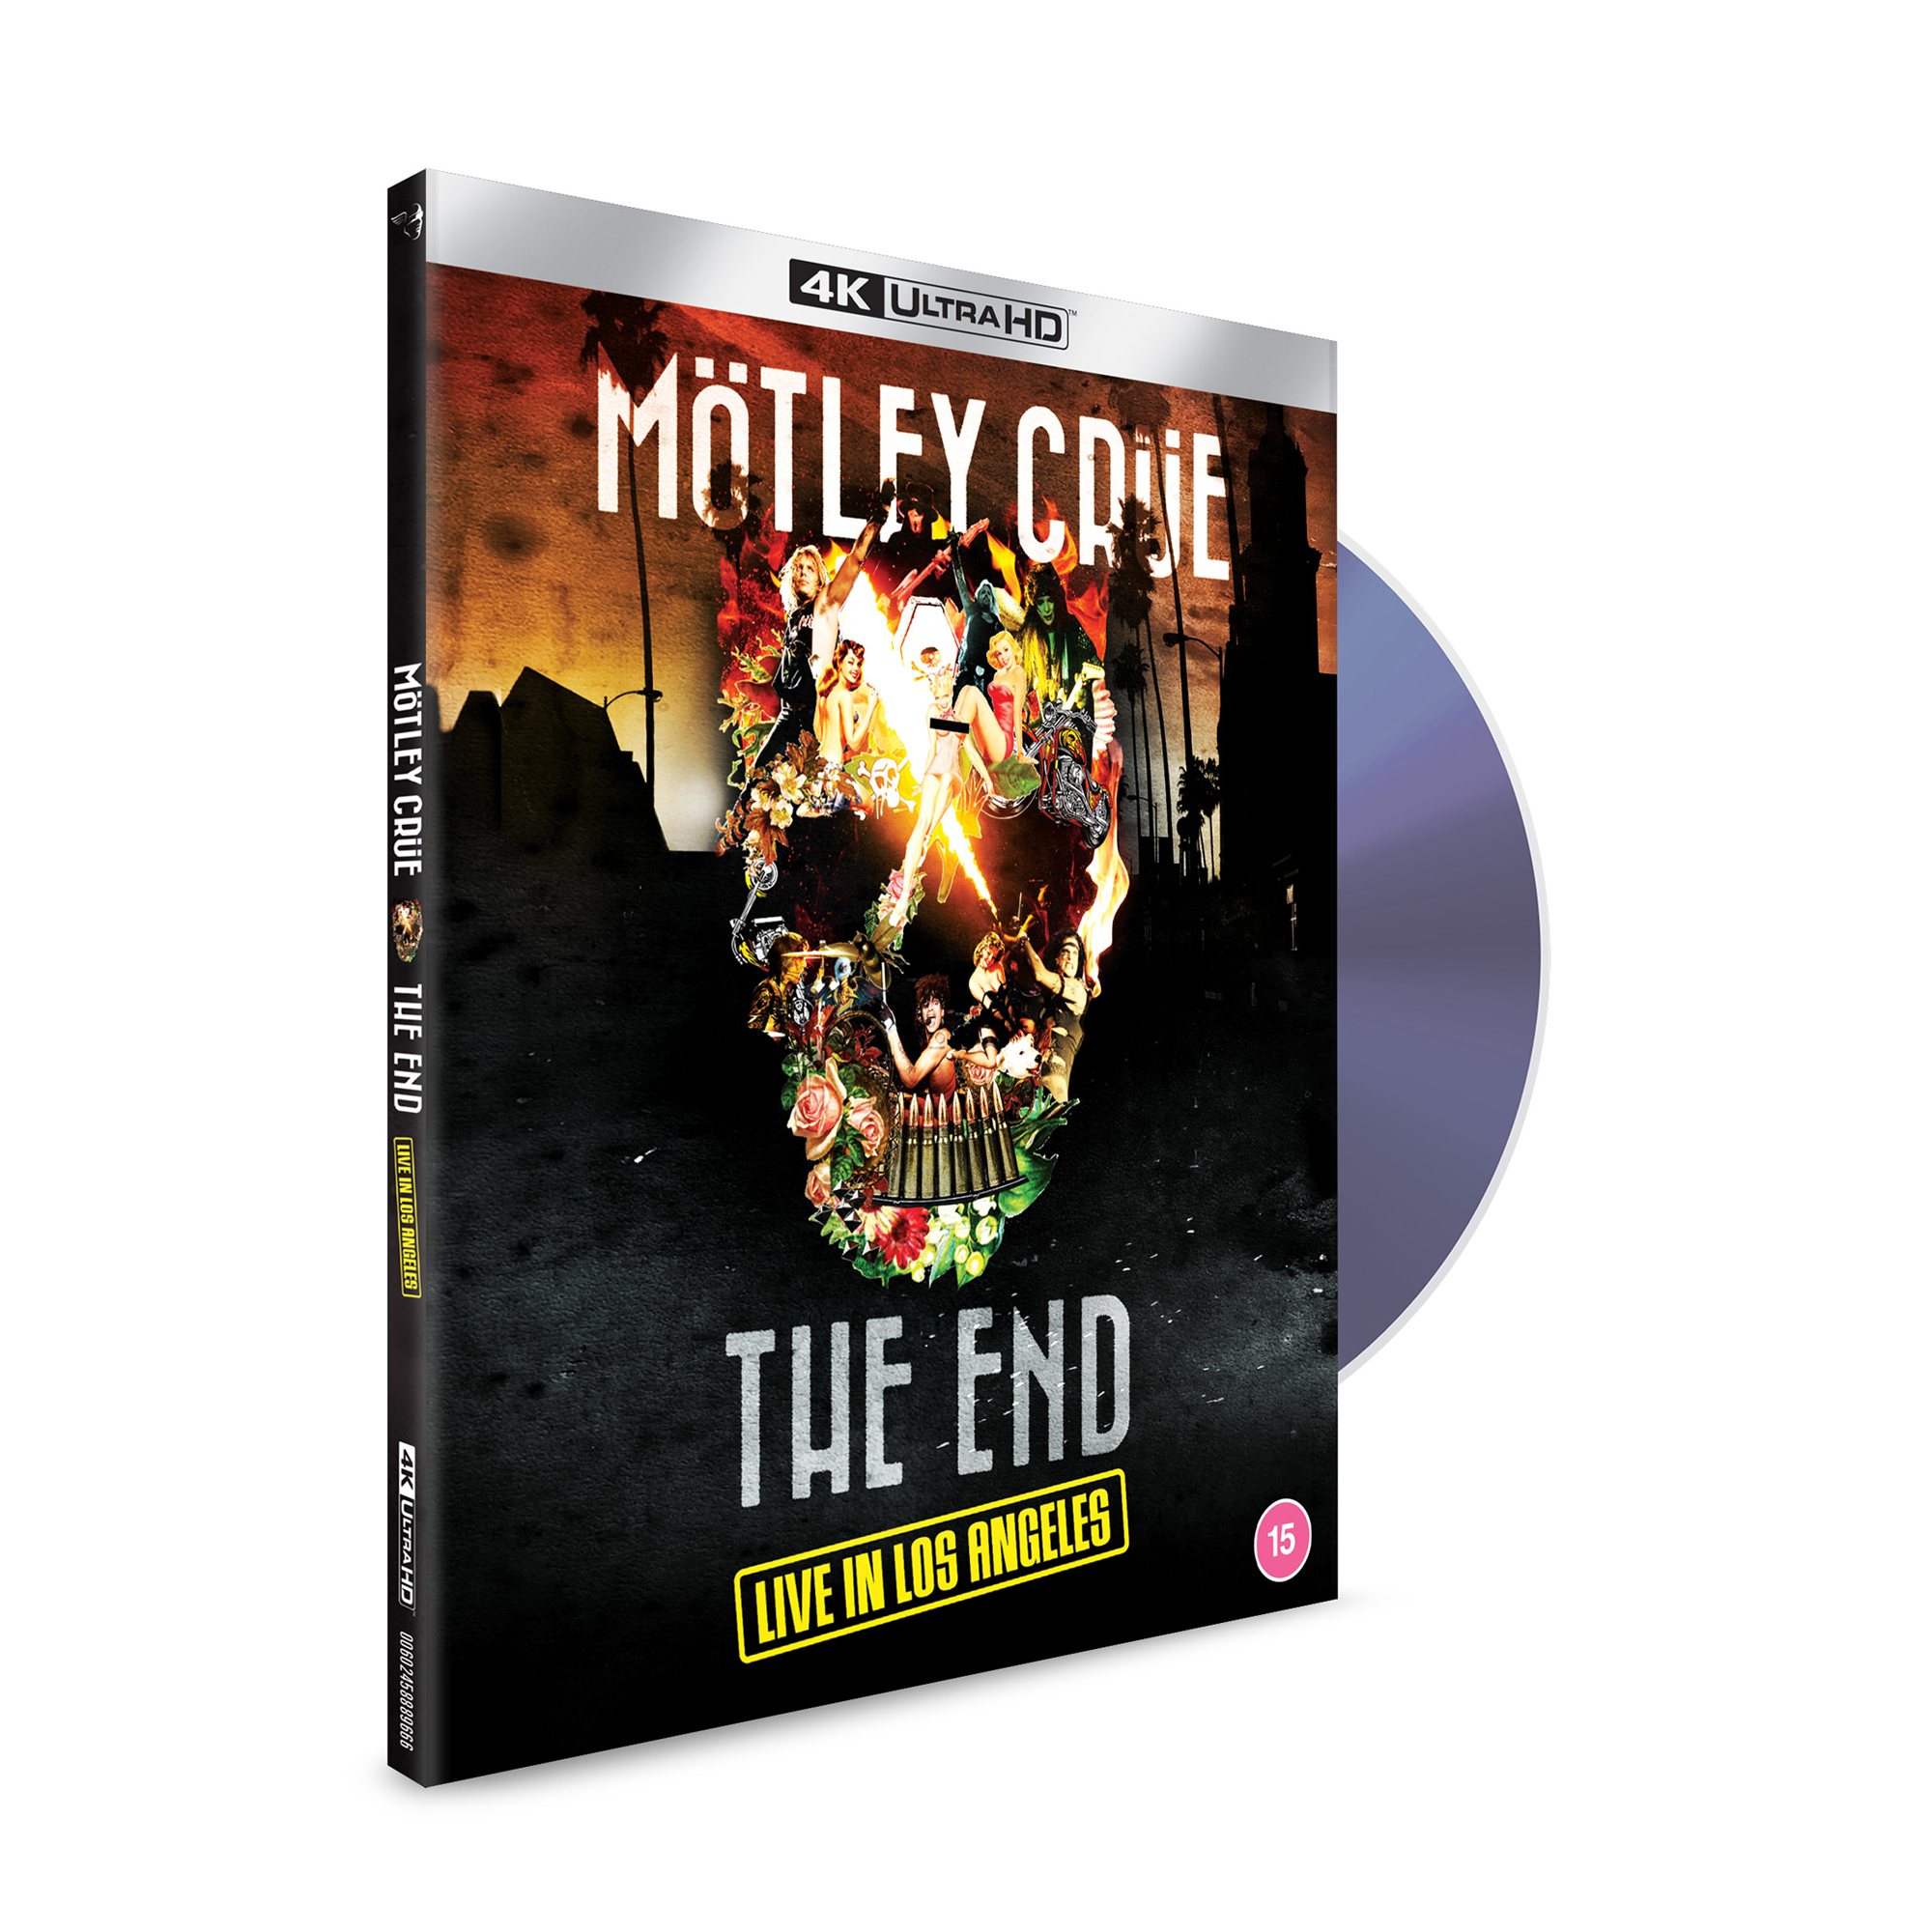 Motley Crue - The End - Live In Los Angeles: 4K UHD Blu-Ray